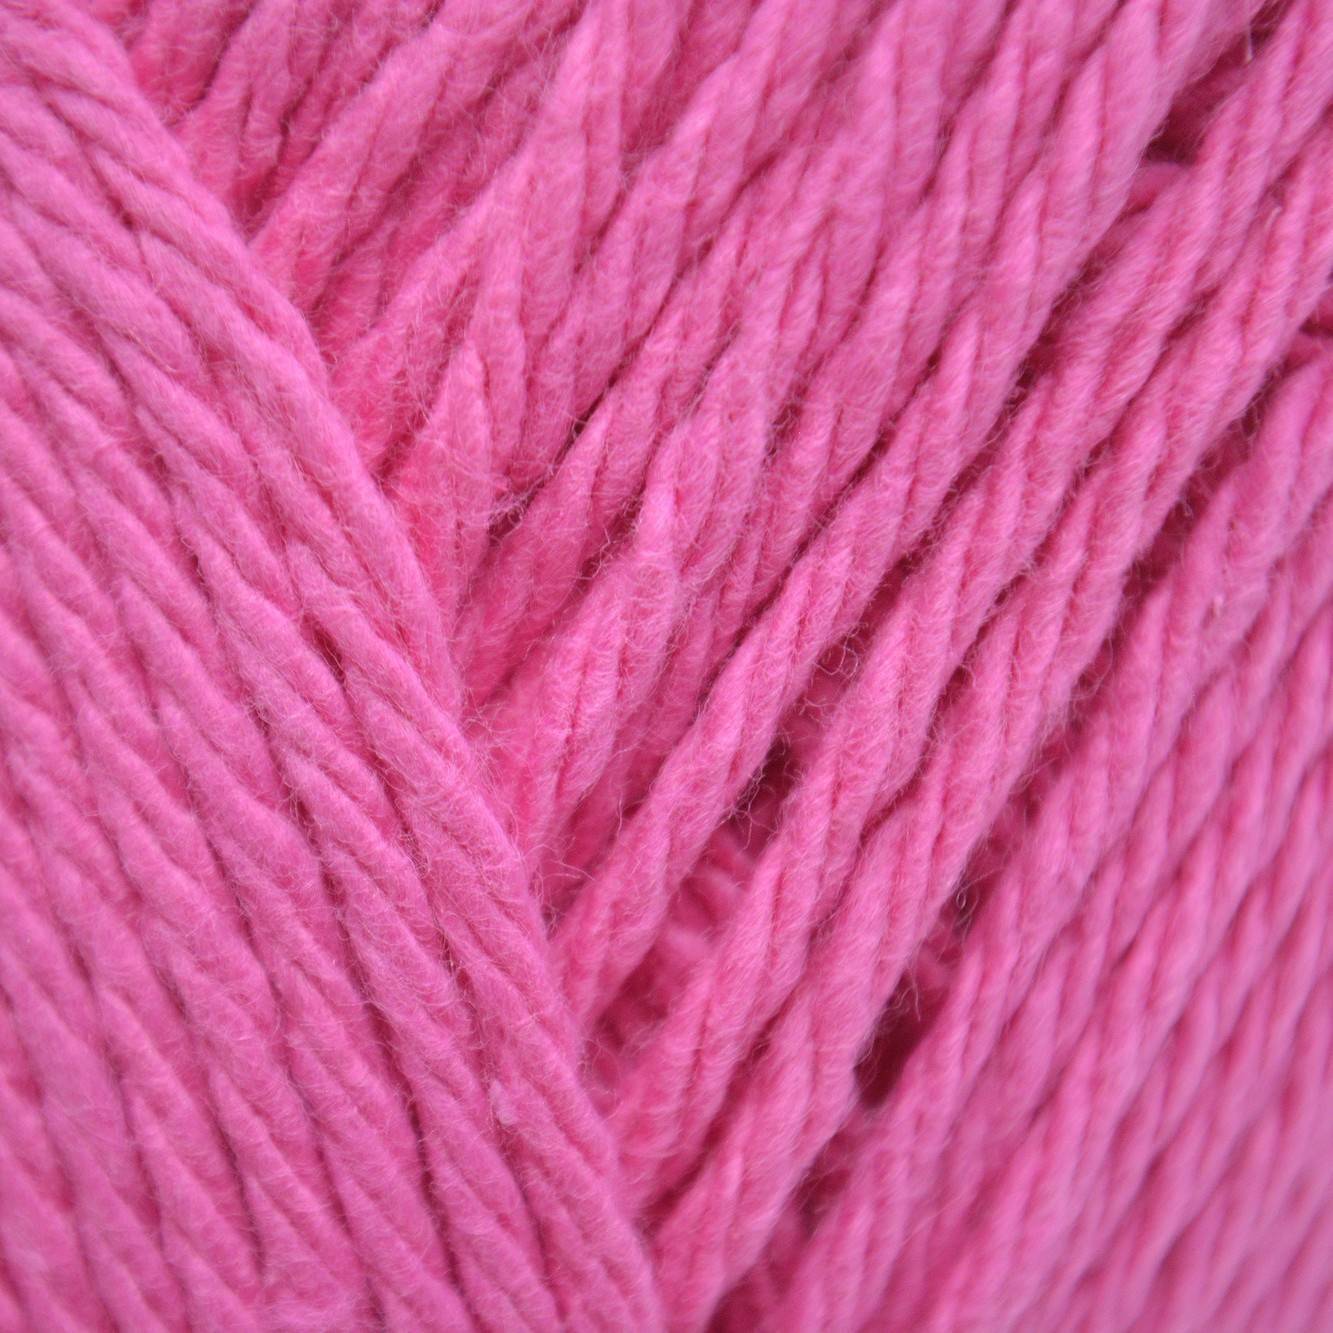 Lily Sugar 'n Cream Original - Hot Pink (01740) | The Knitting Network